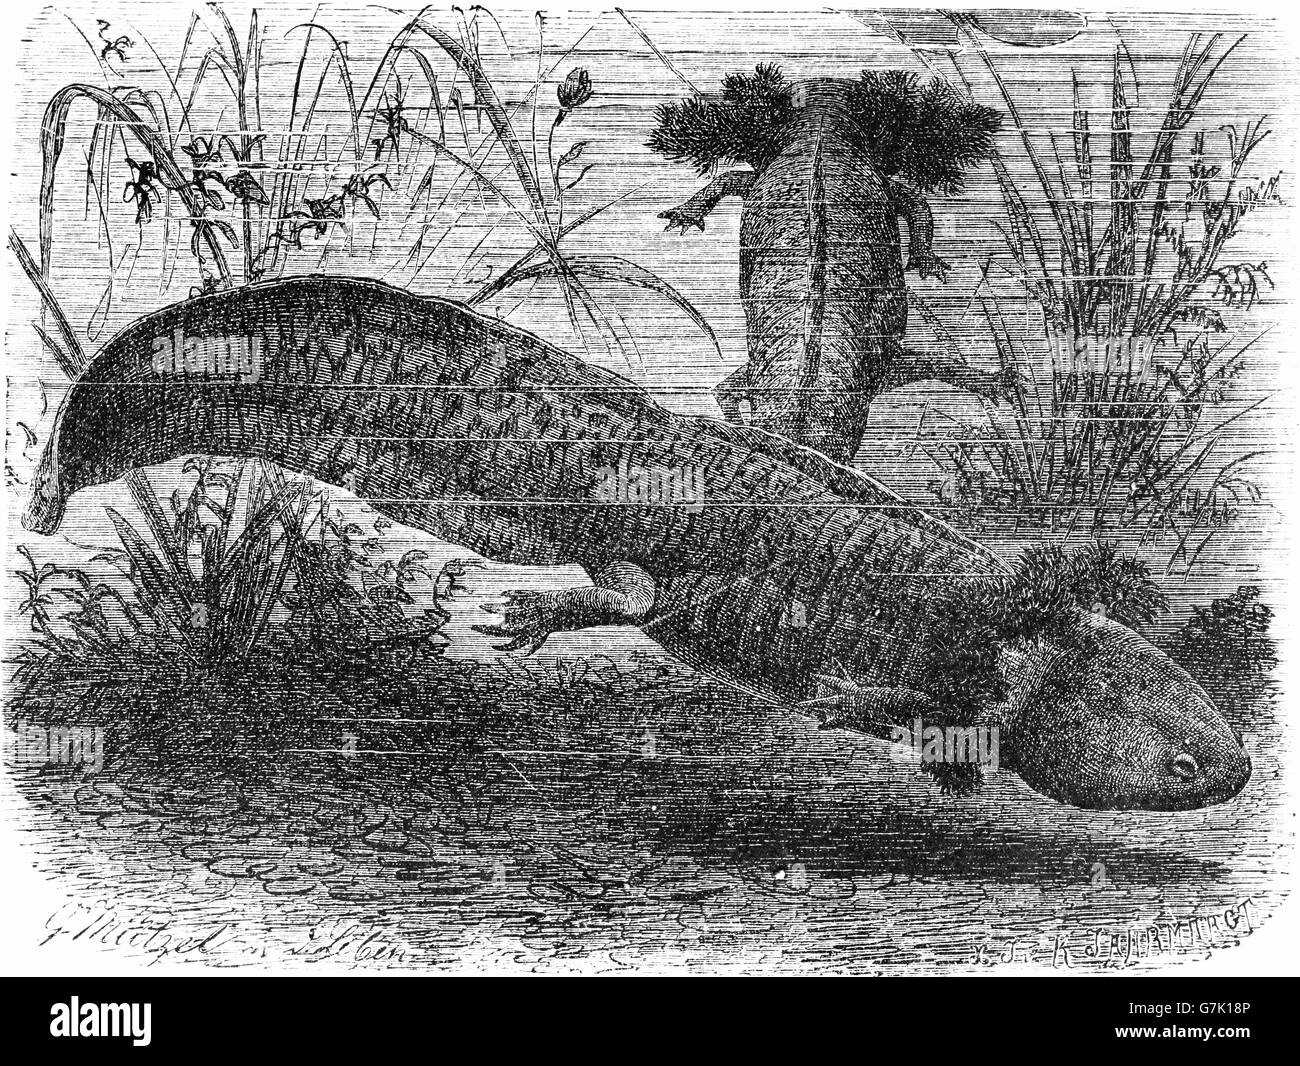 Axolotl, Mexican salamander, Mexican walking fish, Ambystoma mexicanum, amphibian, illustration from book dated 1904 Stock Photo